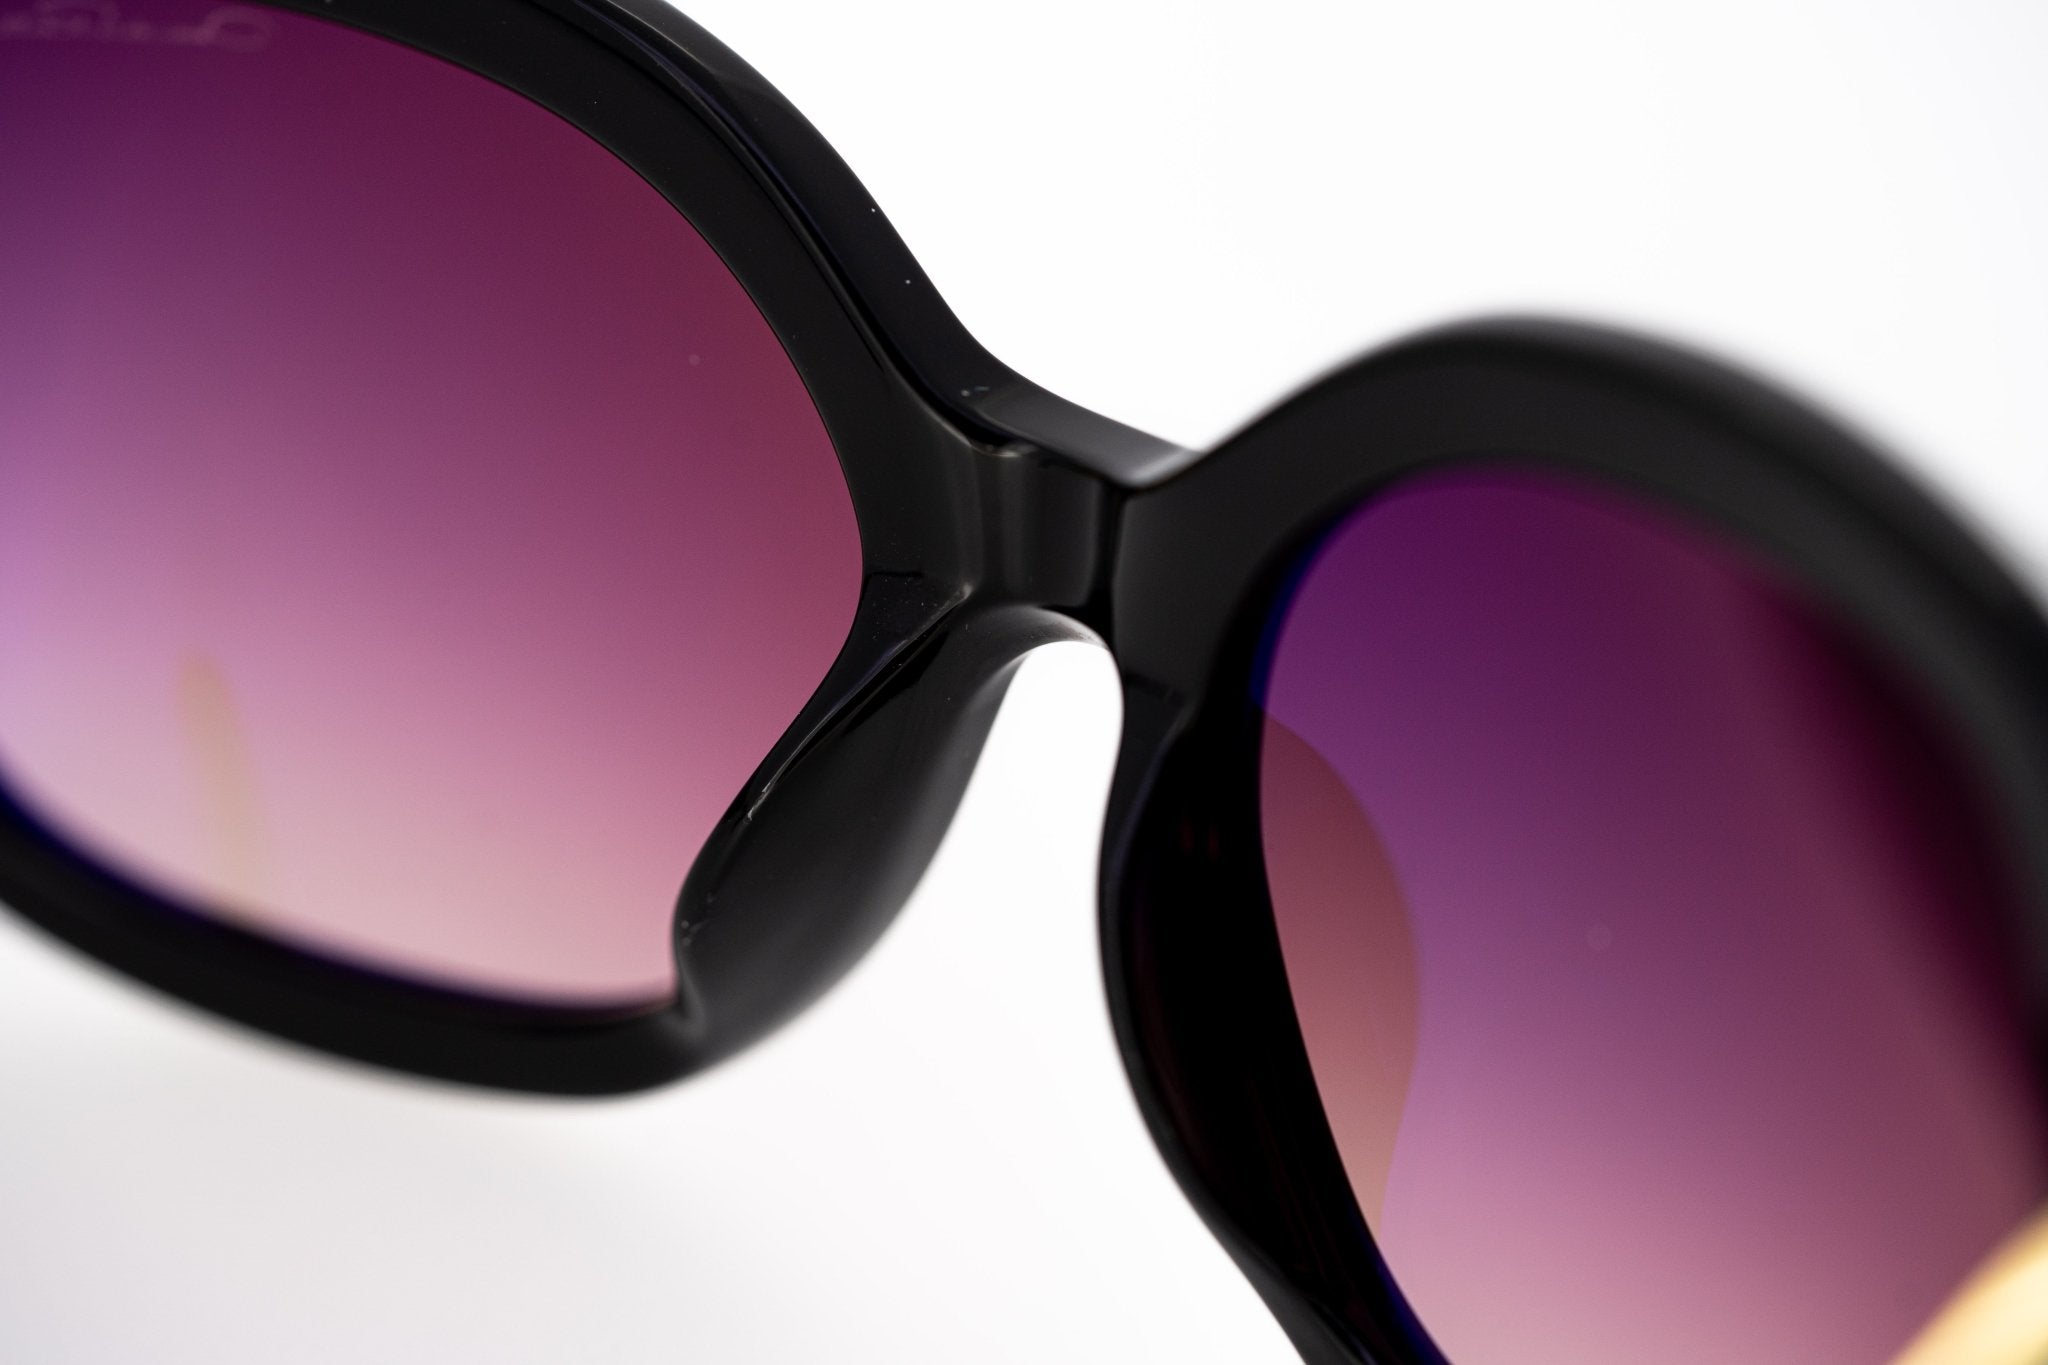 Oscar De La Renta Sunglasses Jackie O Black and Pink Lenses - ODLR34C1SUN - Watches & Crystals